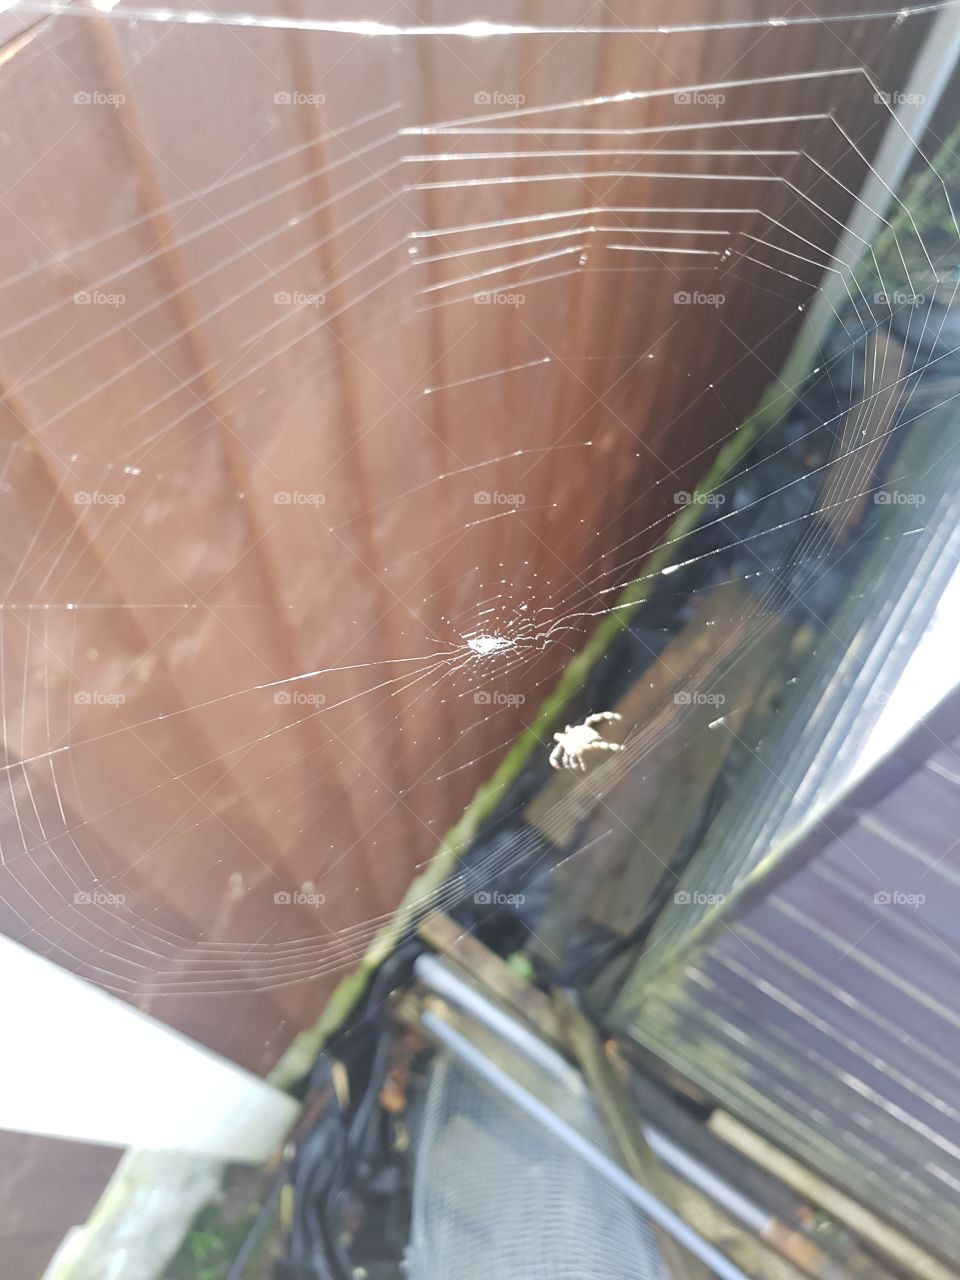 Spider building a Web